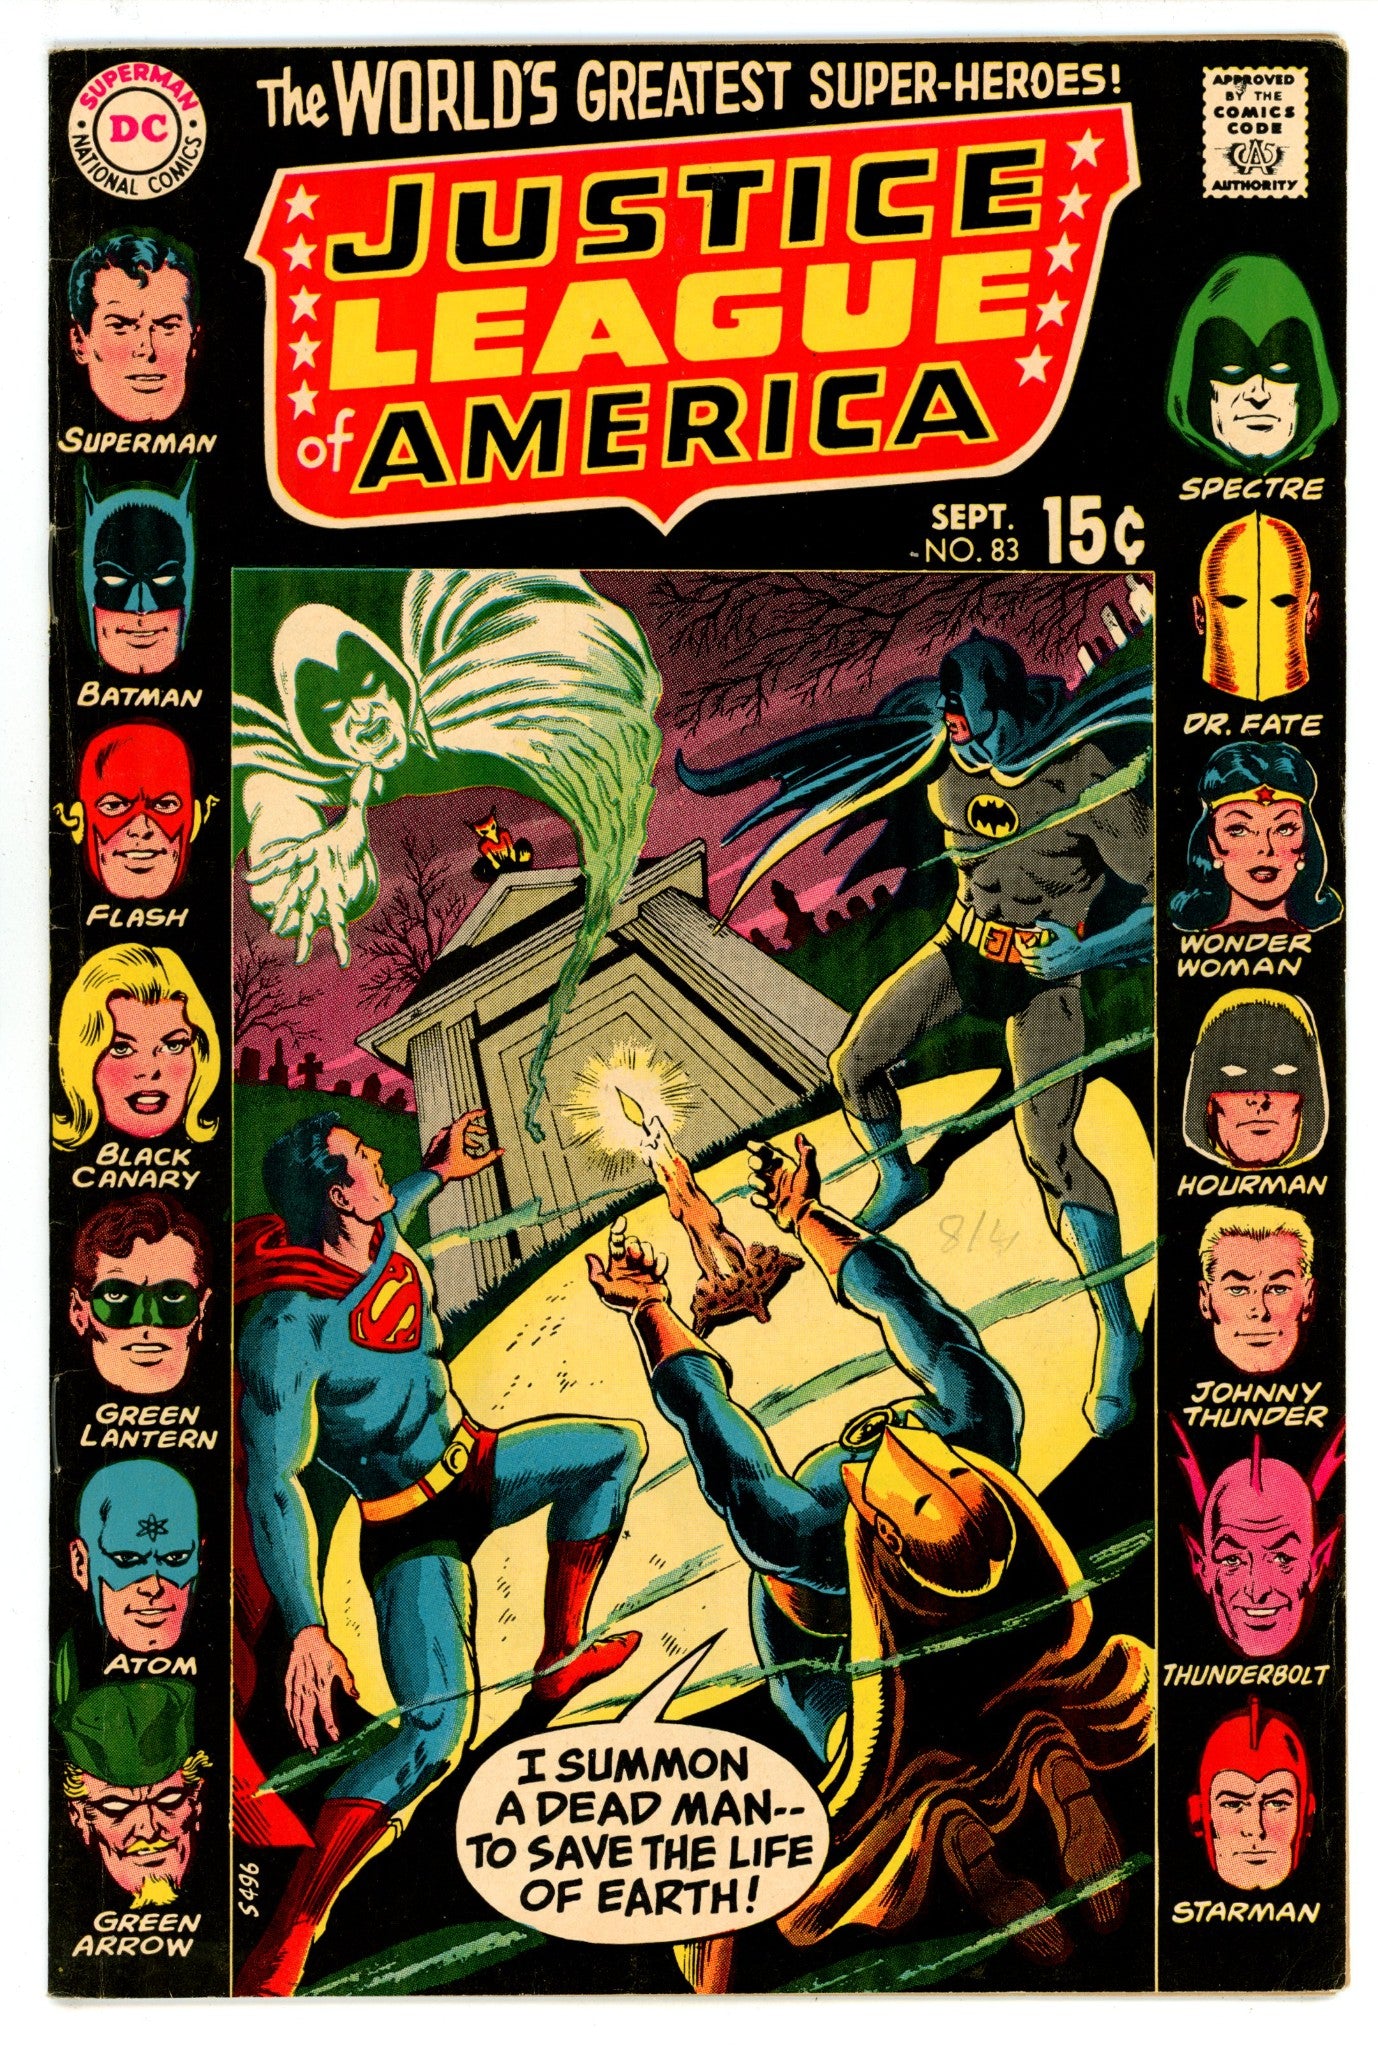 Justice League of America Vol 1 83 FN+ (6.5) (1970) 